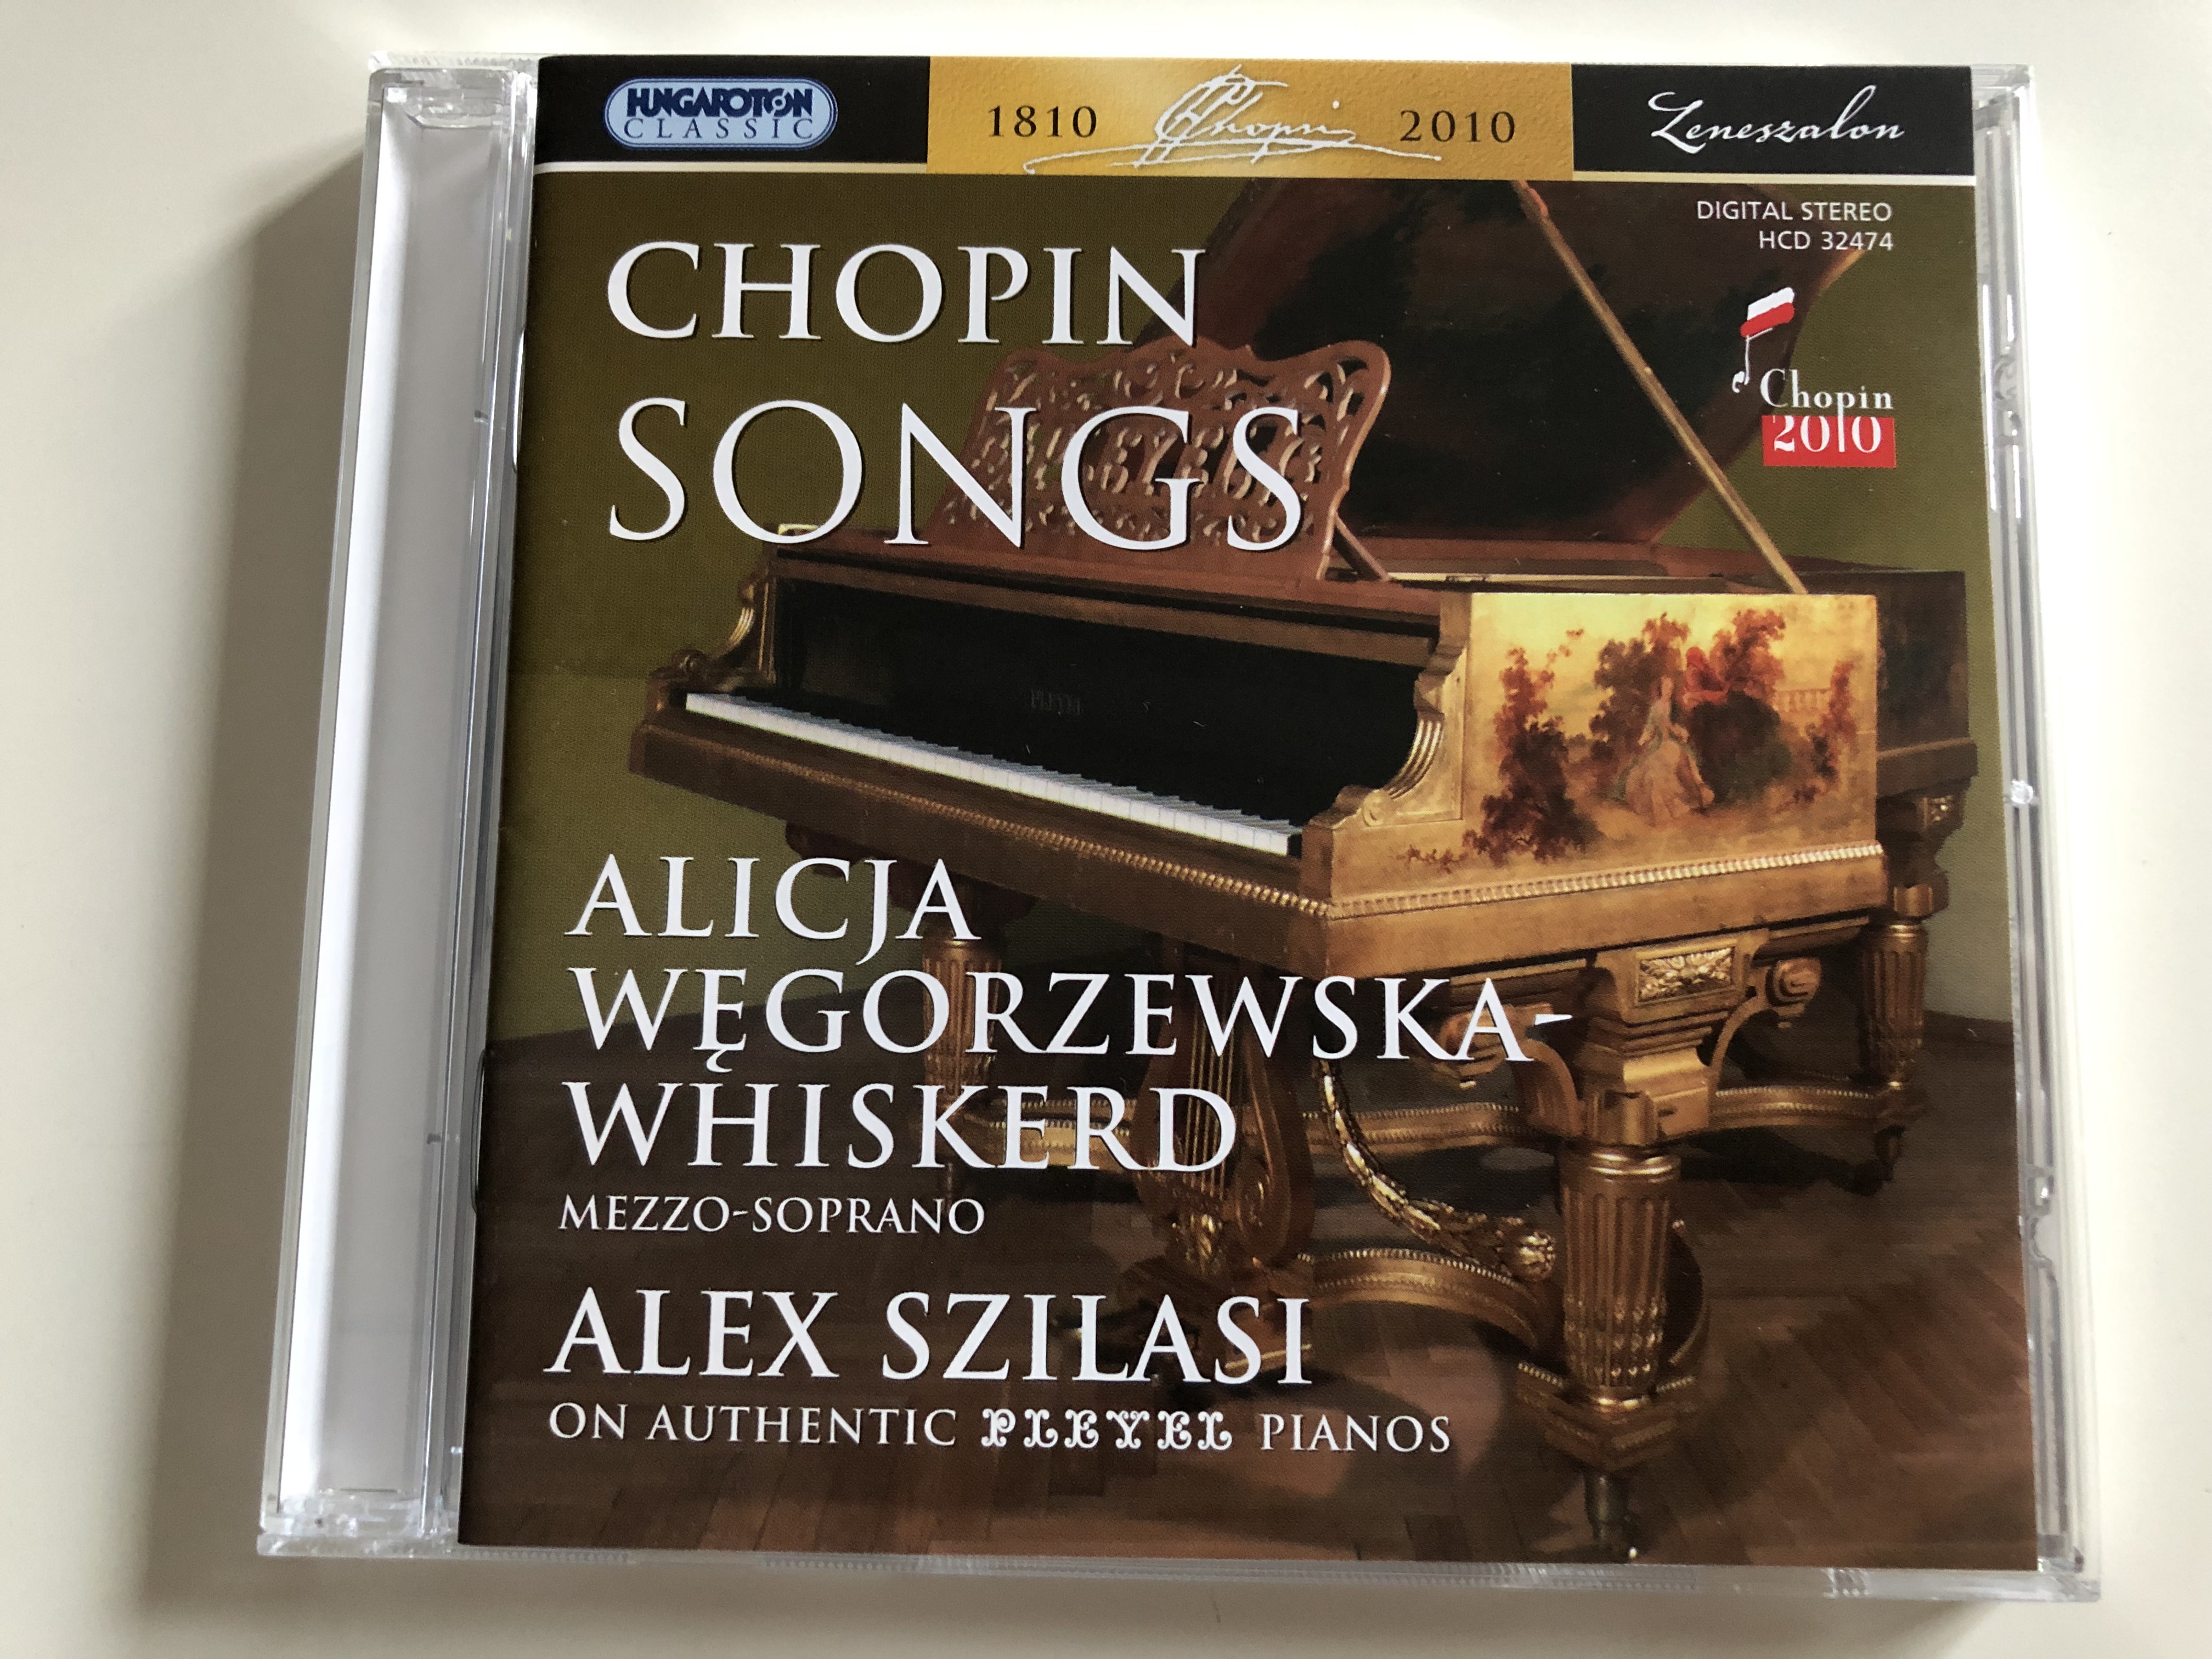 chopin-songs-alicja-wegorzewska-whiskerd-mezzo-soprano-alex-szilasi-on-authentic-pleyel-pianos-hungaroton-classic-audio-cd-2010-hcd-32474-1-.jpg